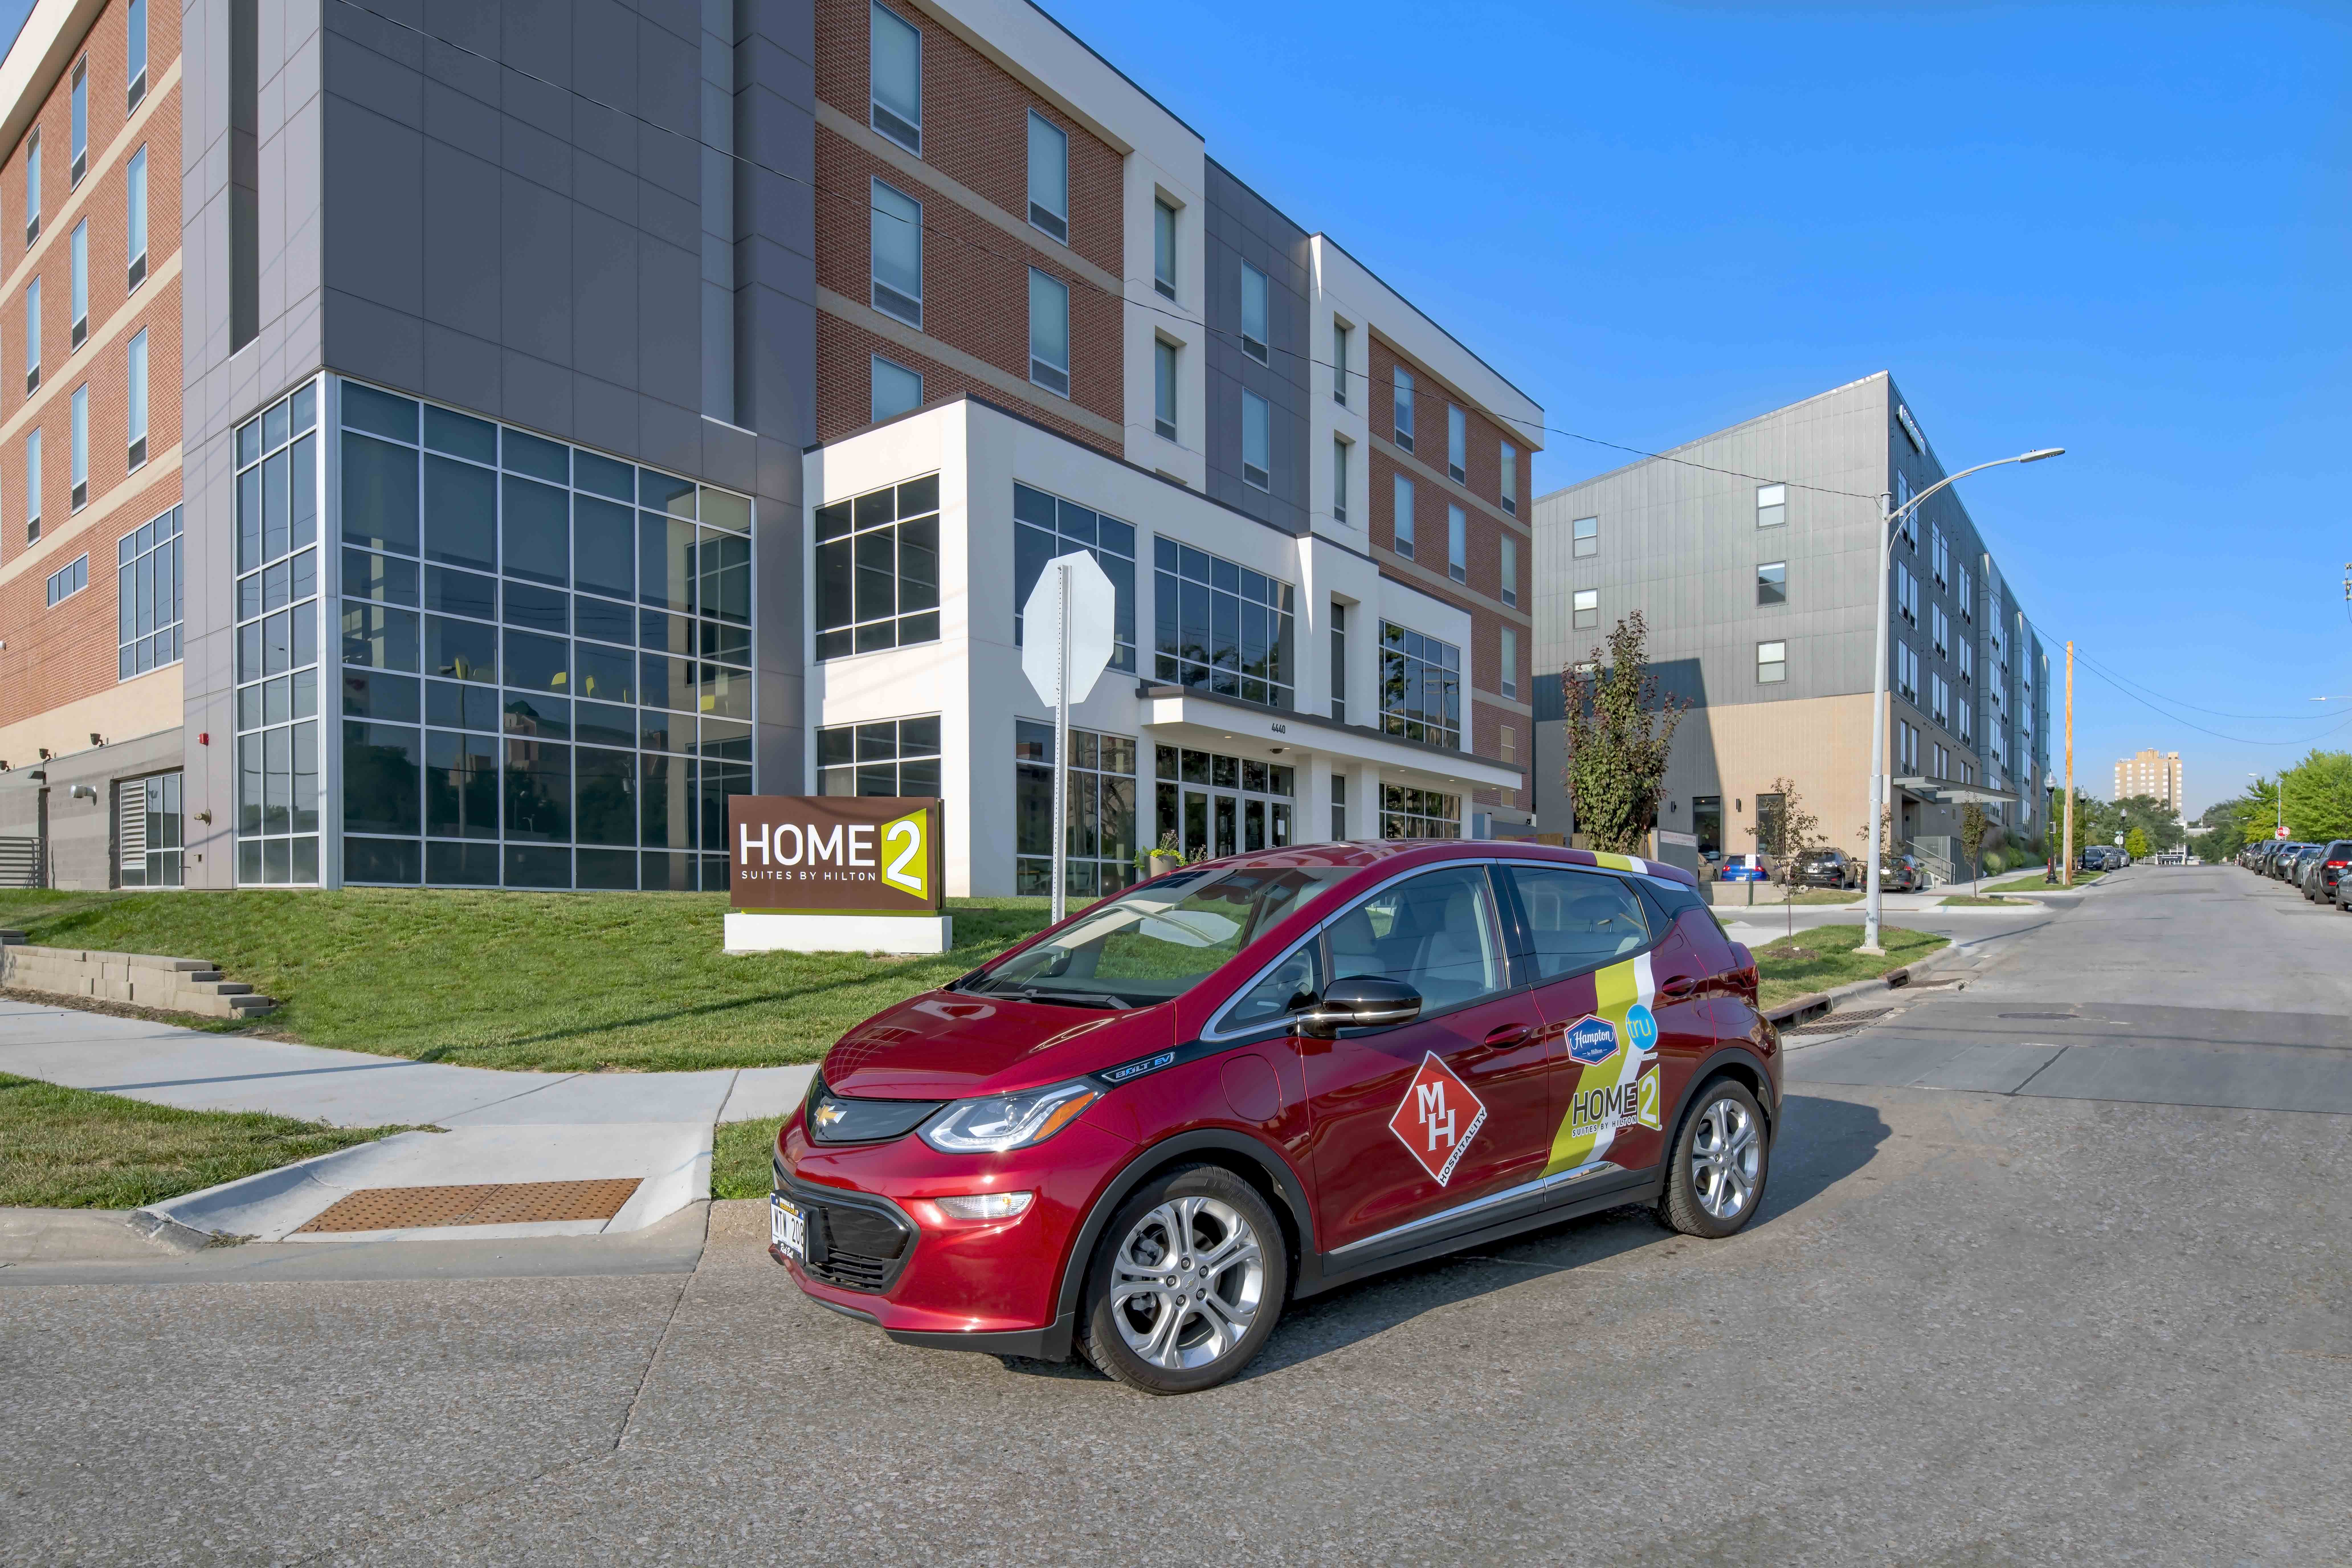 Home2-Hilton-Omaha-NE-UN-Medical-Center-MH-Bolt Car 5